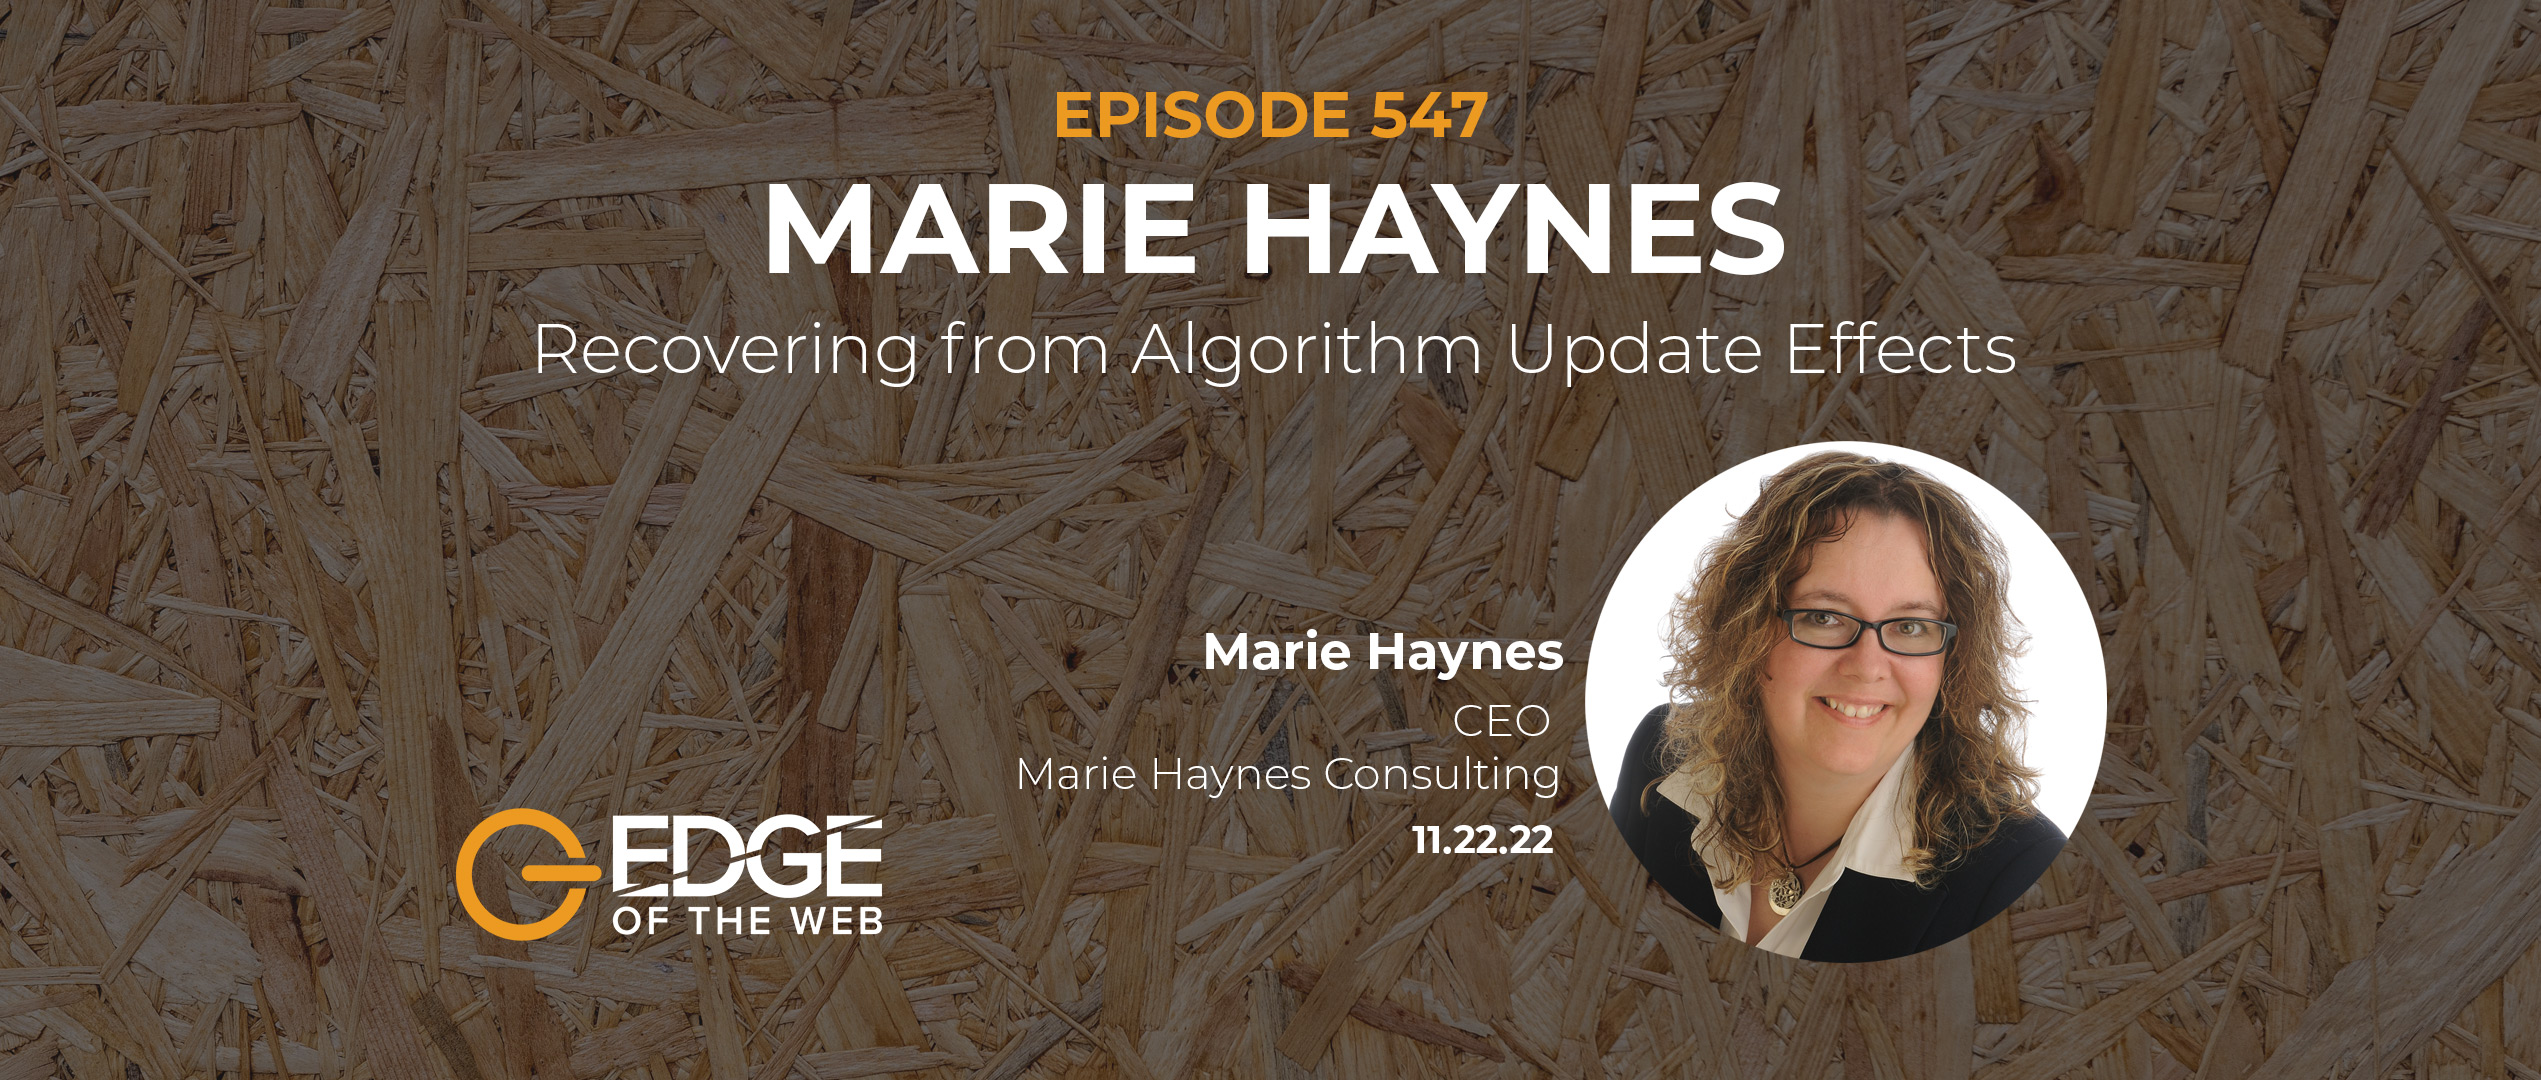 Marie Haynes EDGE Episode 547 Featured Image